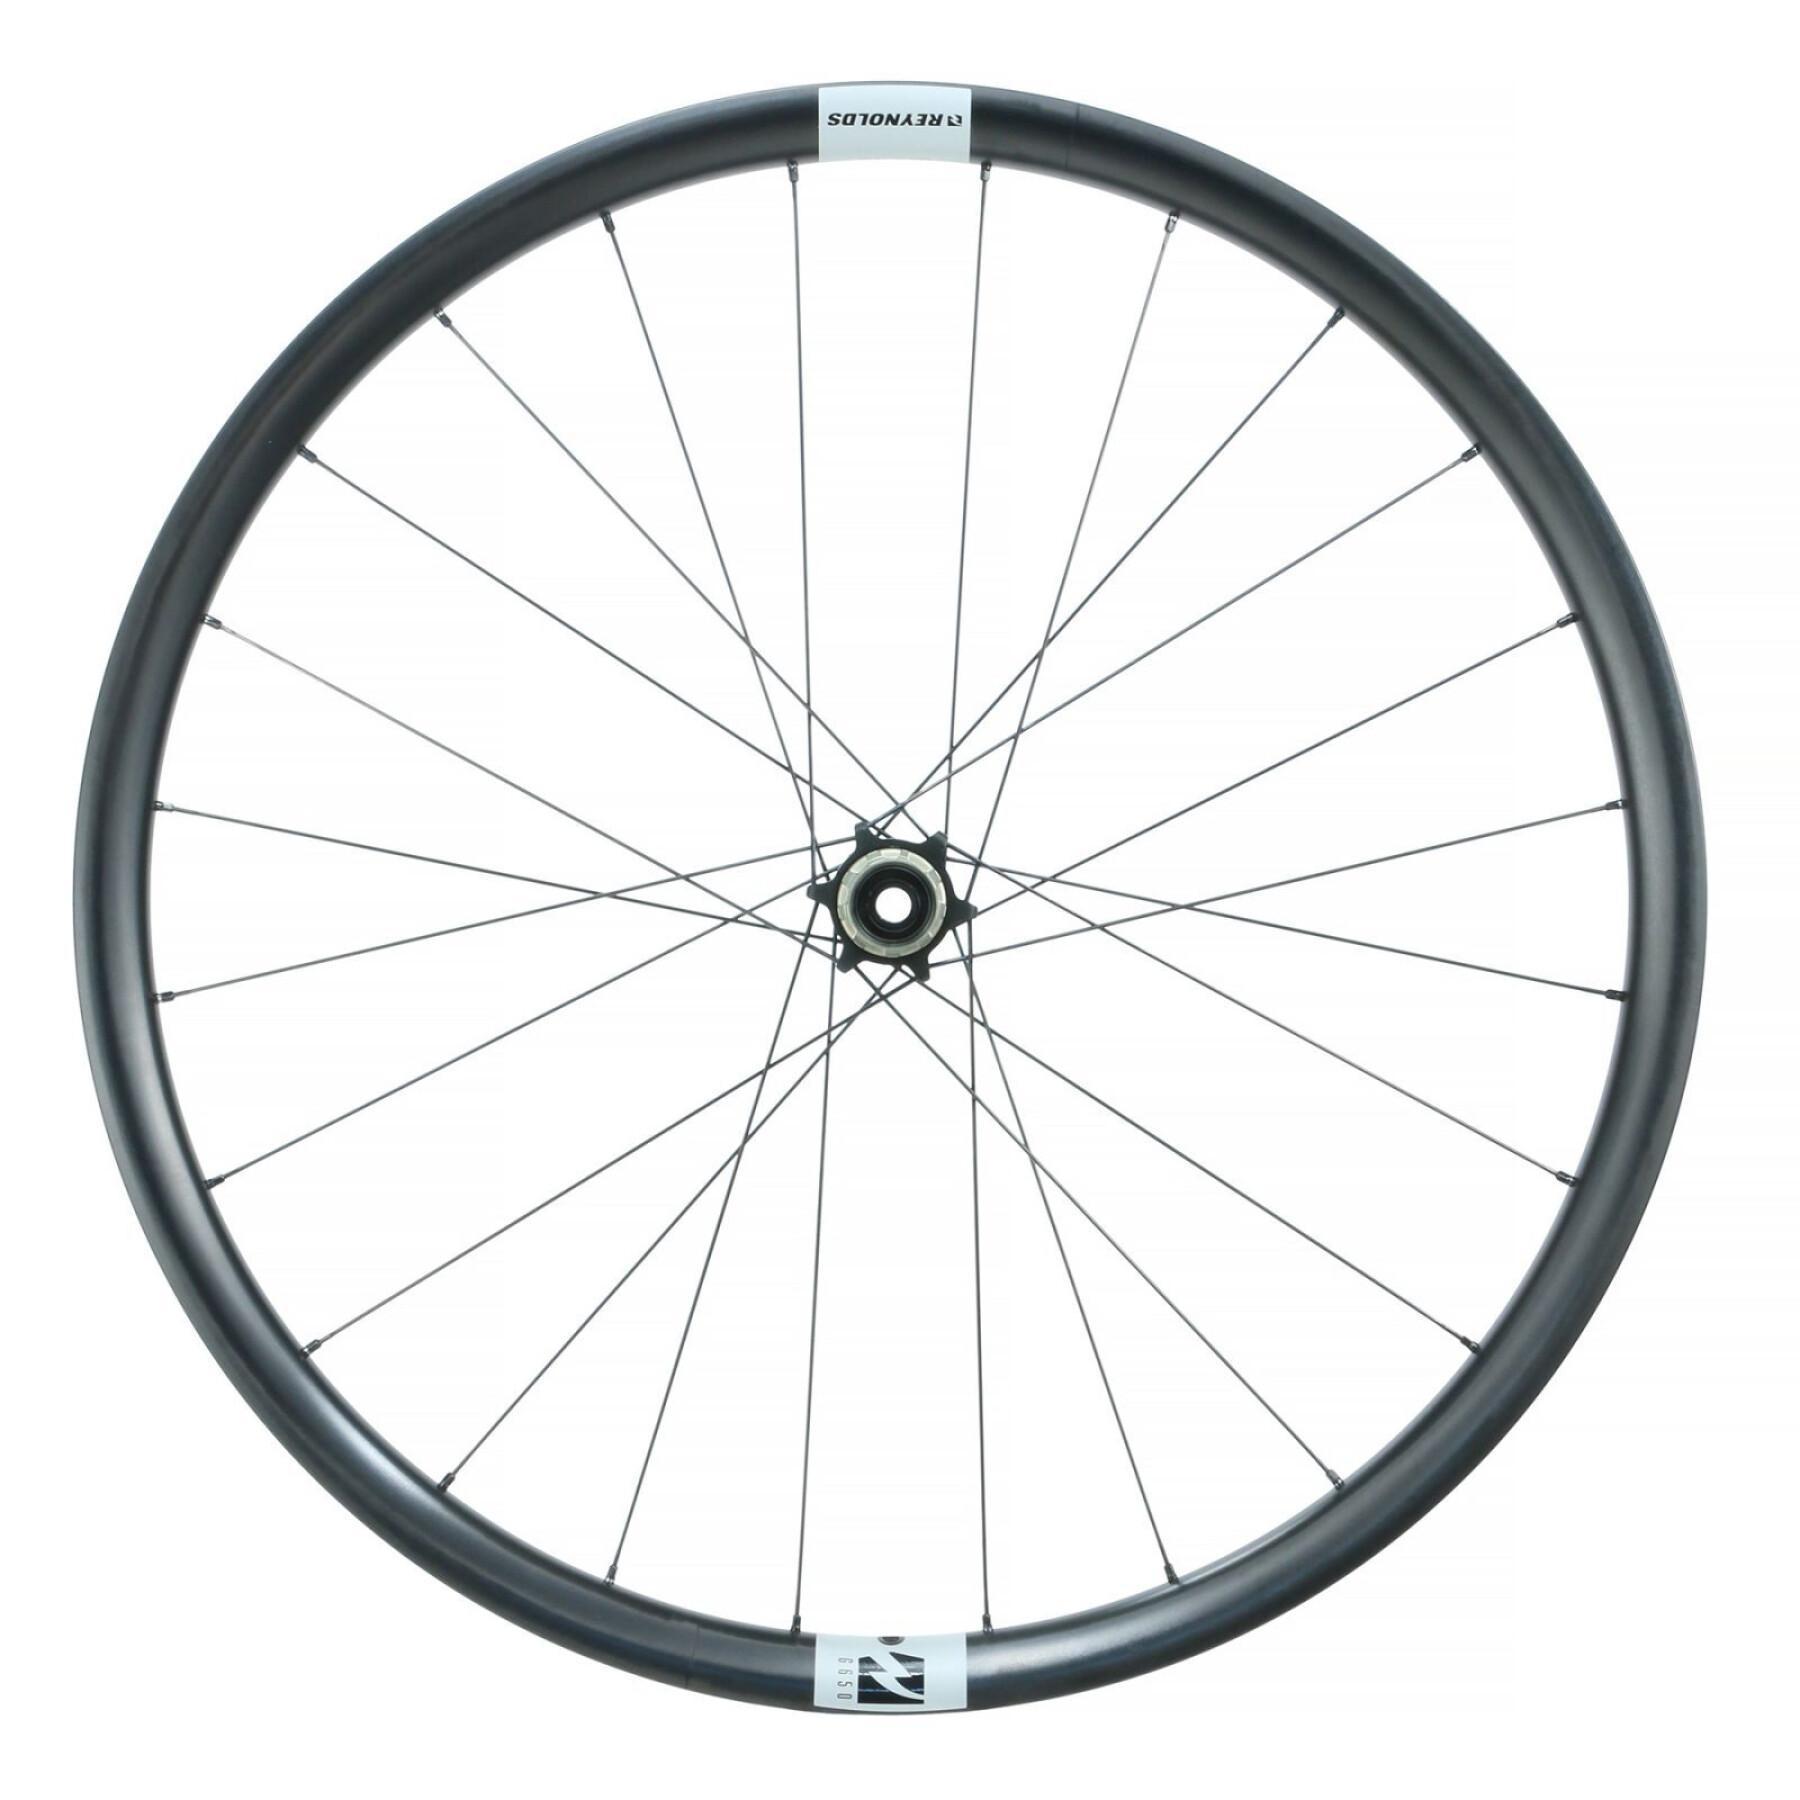 Pair of bicycle wheels Reynolds G650 Shimano